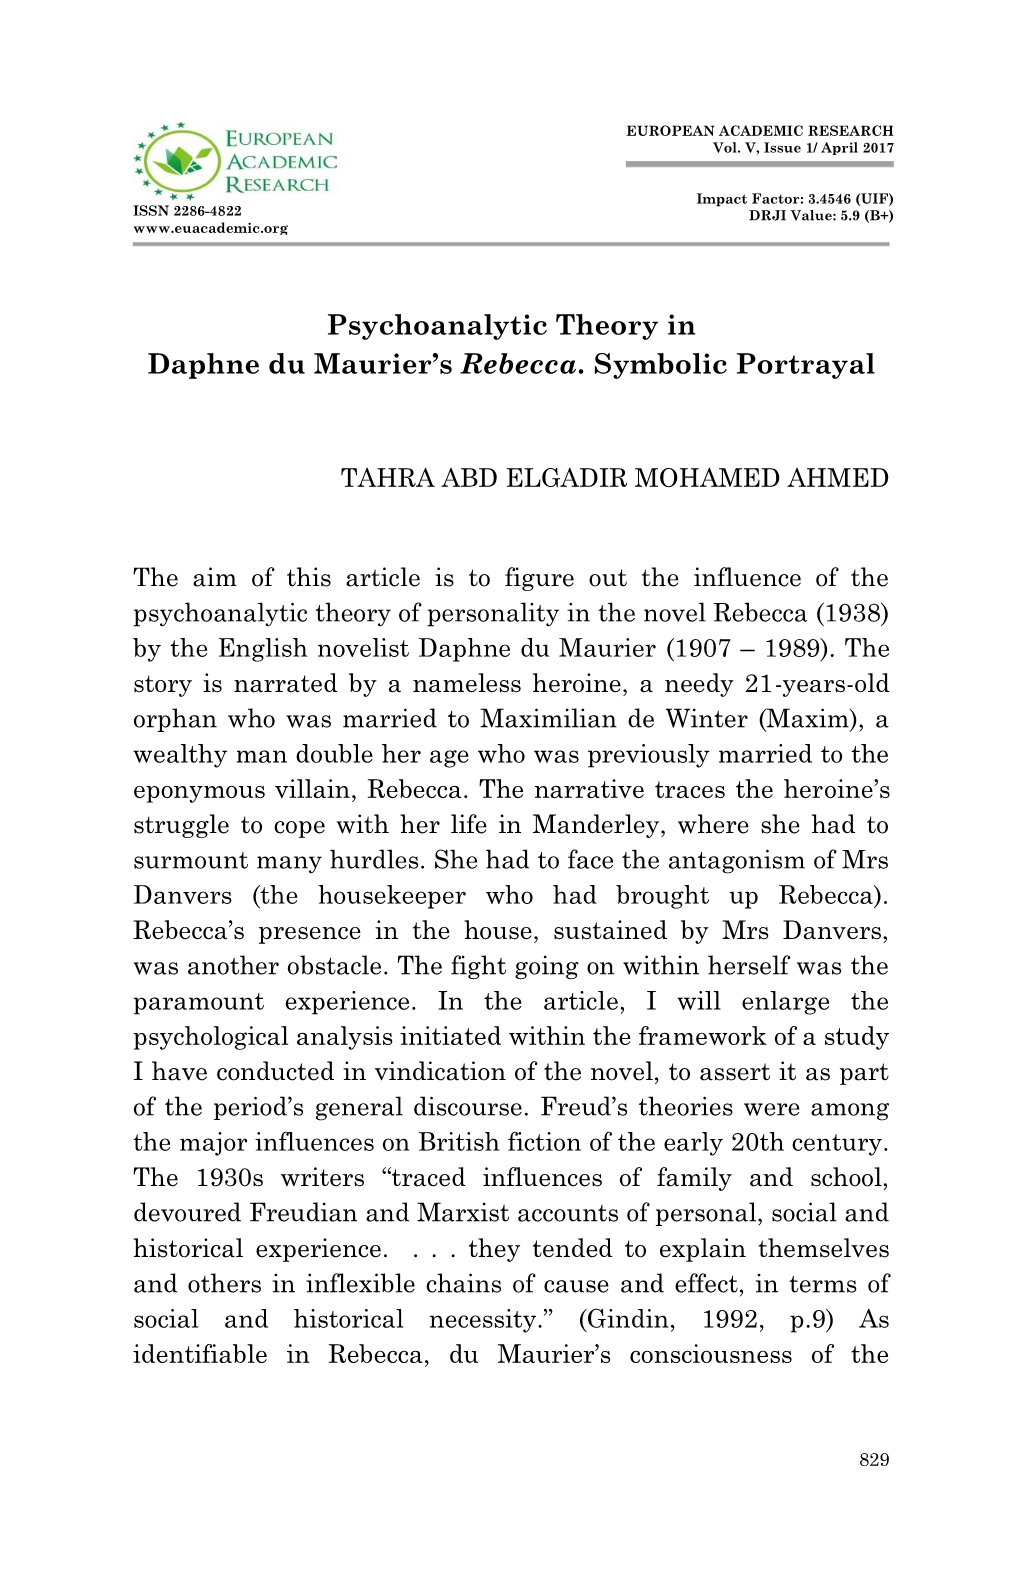 Psychoanalytic Theory in Daphne Du Maurier's Rebecca. Symbolic Portrayal